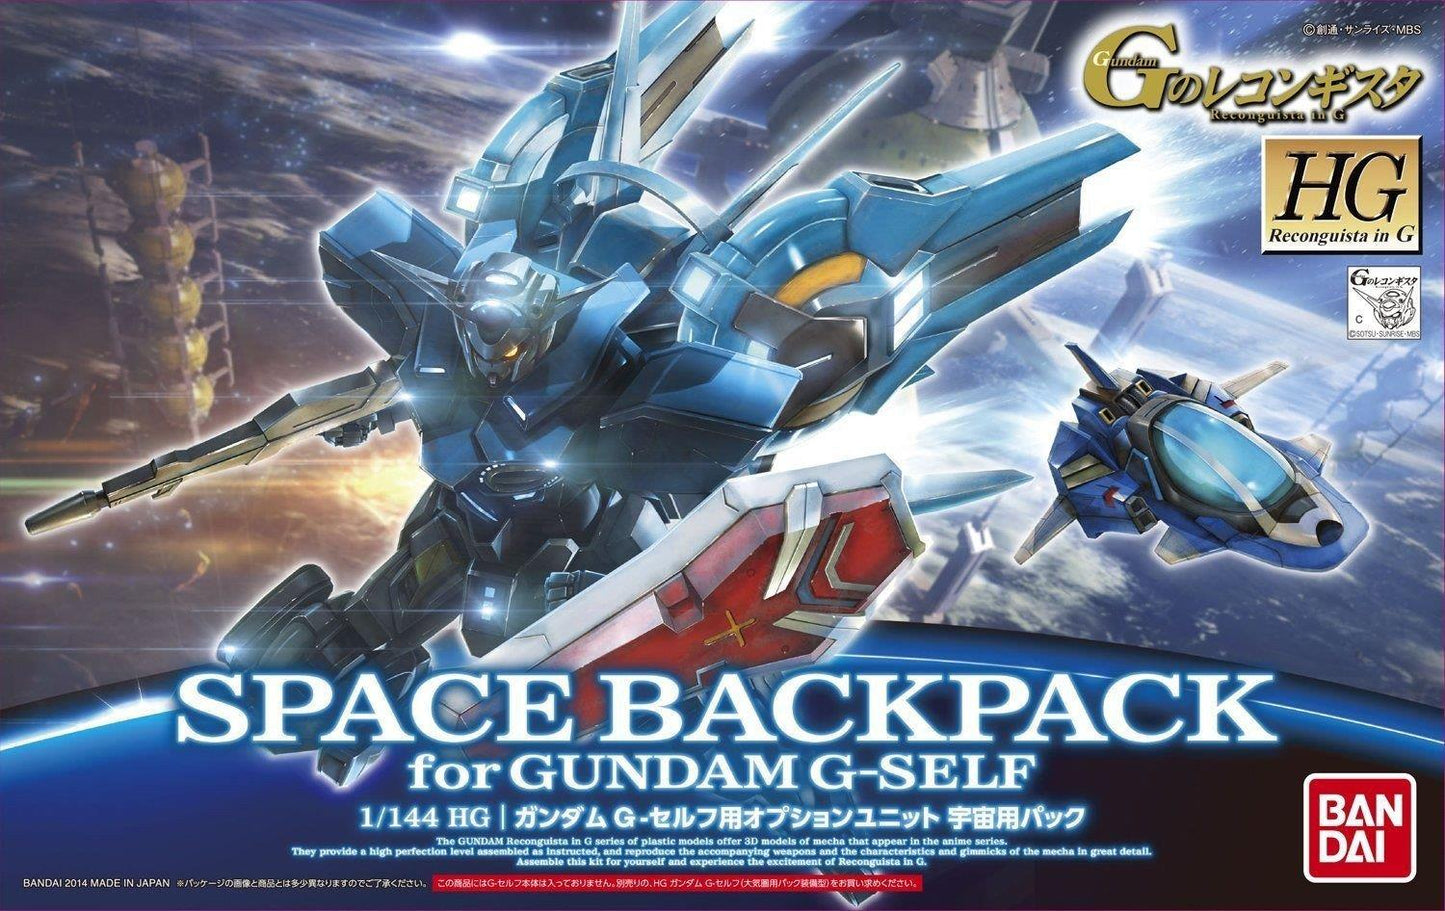 Gundam: Space Backpack for Gundam G-Self HG (Reconguista in G) Model Option Pack